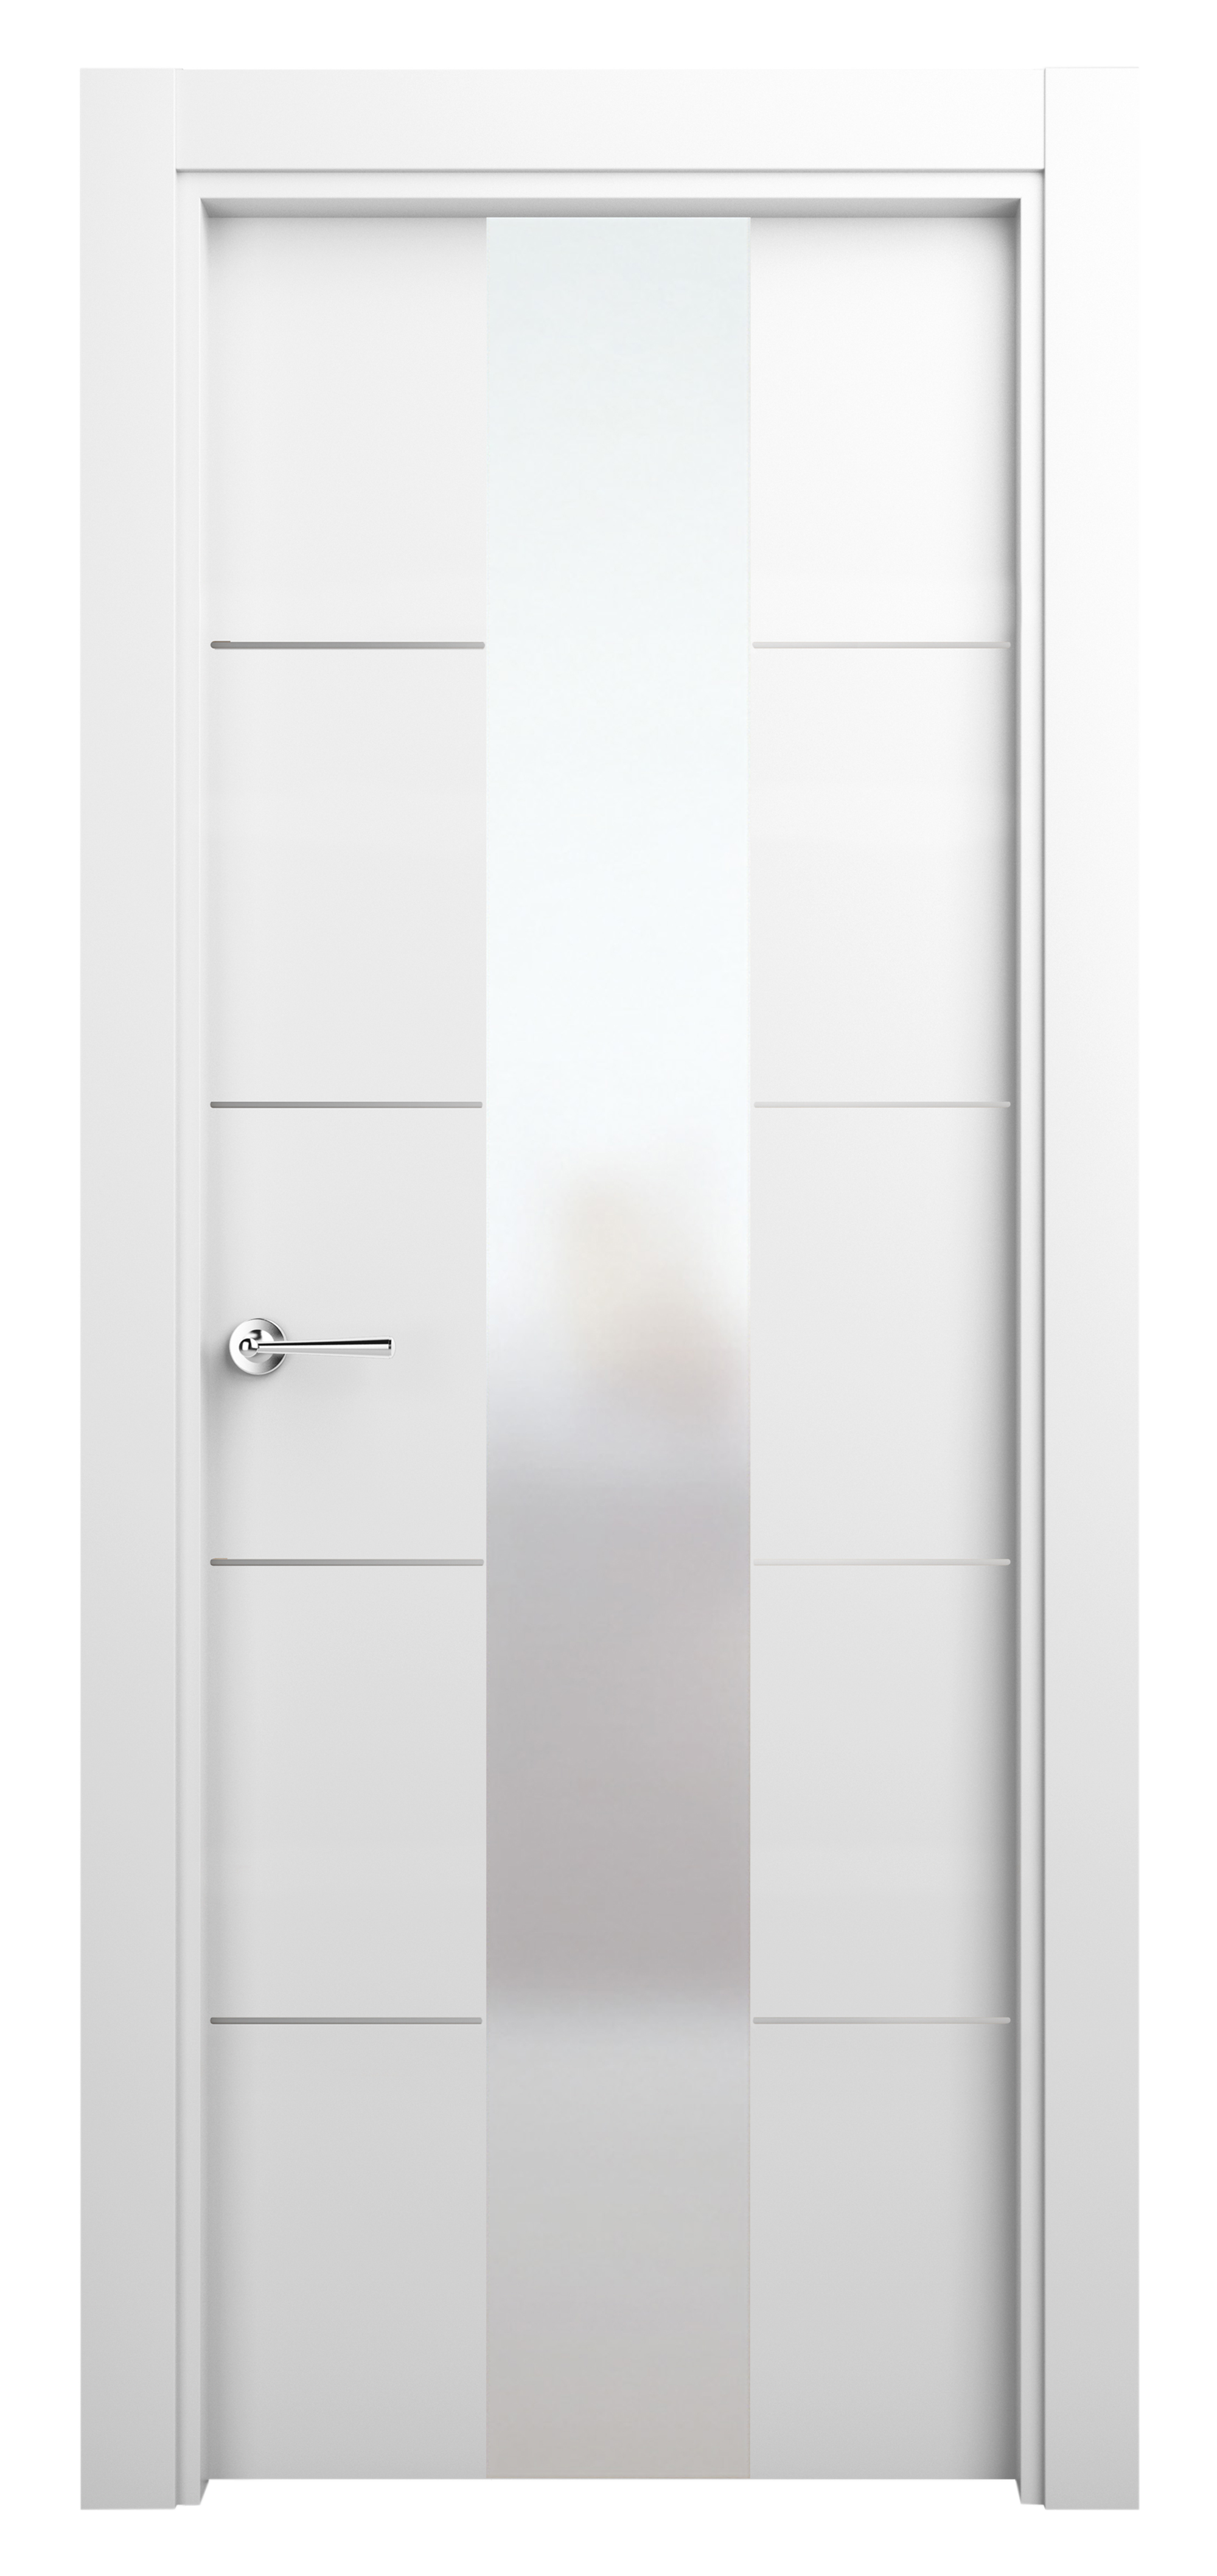 Puerta abatible paris blanca premium apertura derecha de 9x62.5 cm